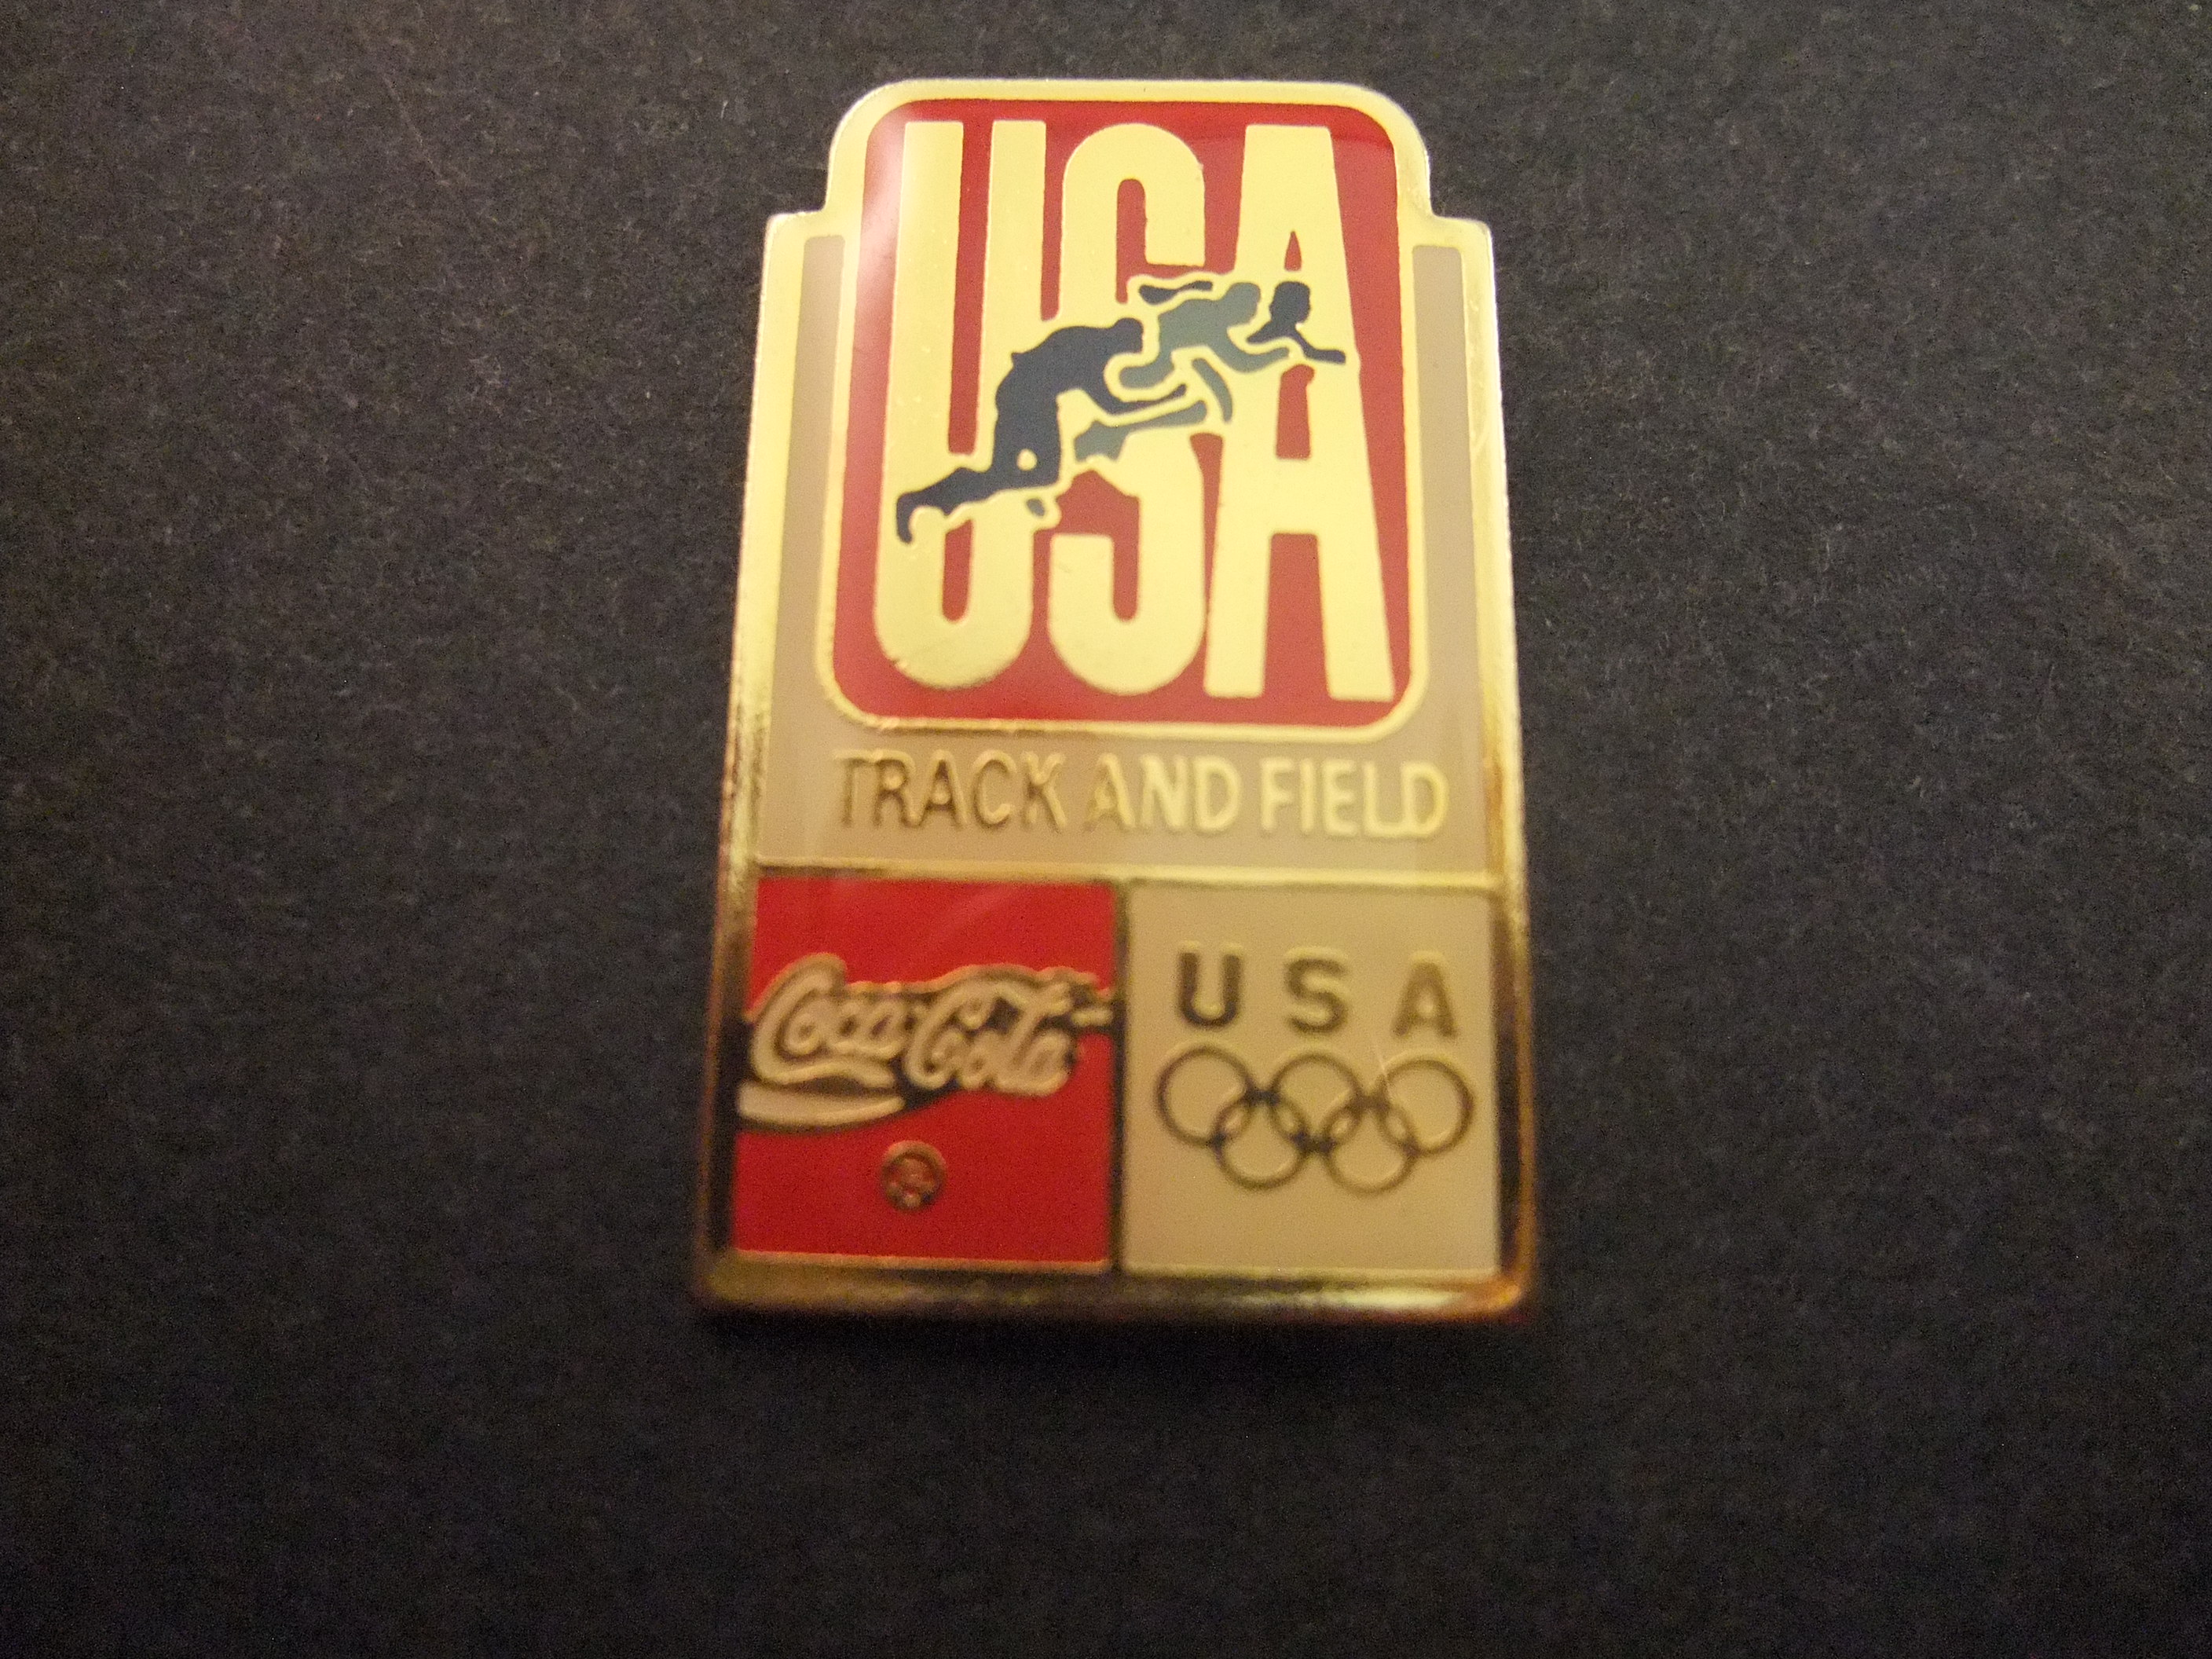 Olympische Spelen Seoel 1988 team USA track and field sponsor Coca Cola